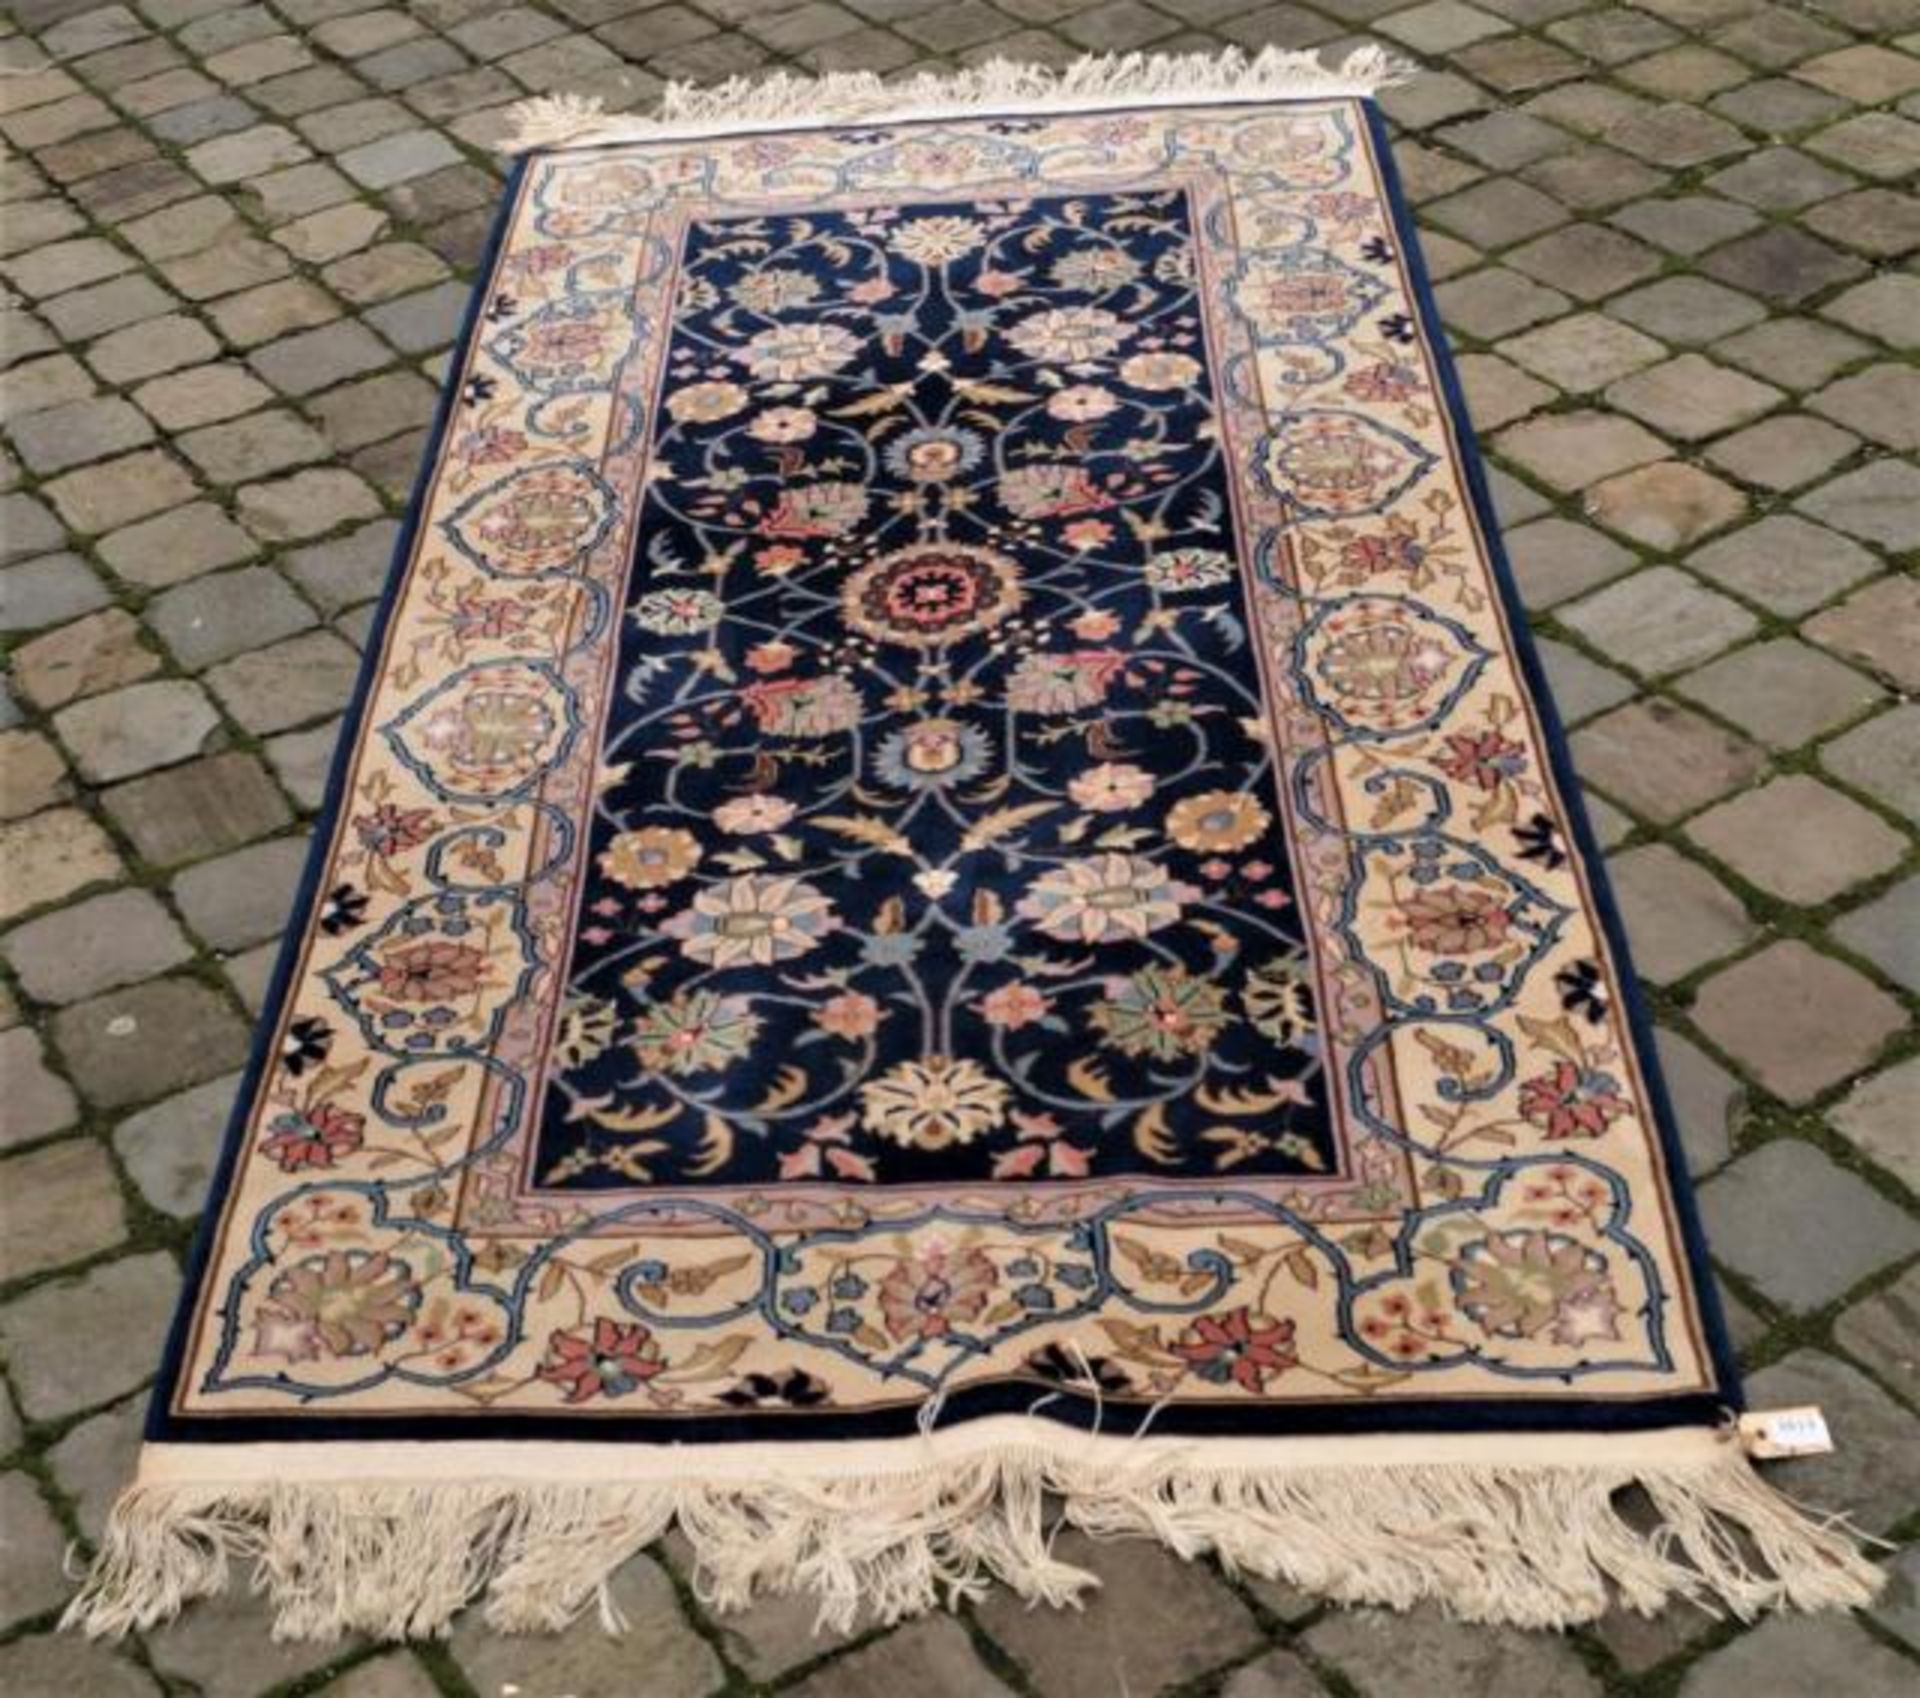 Chinese carpet, dim. 182 x 91 cm.